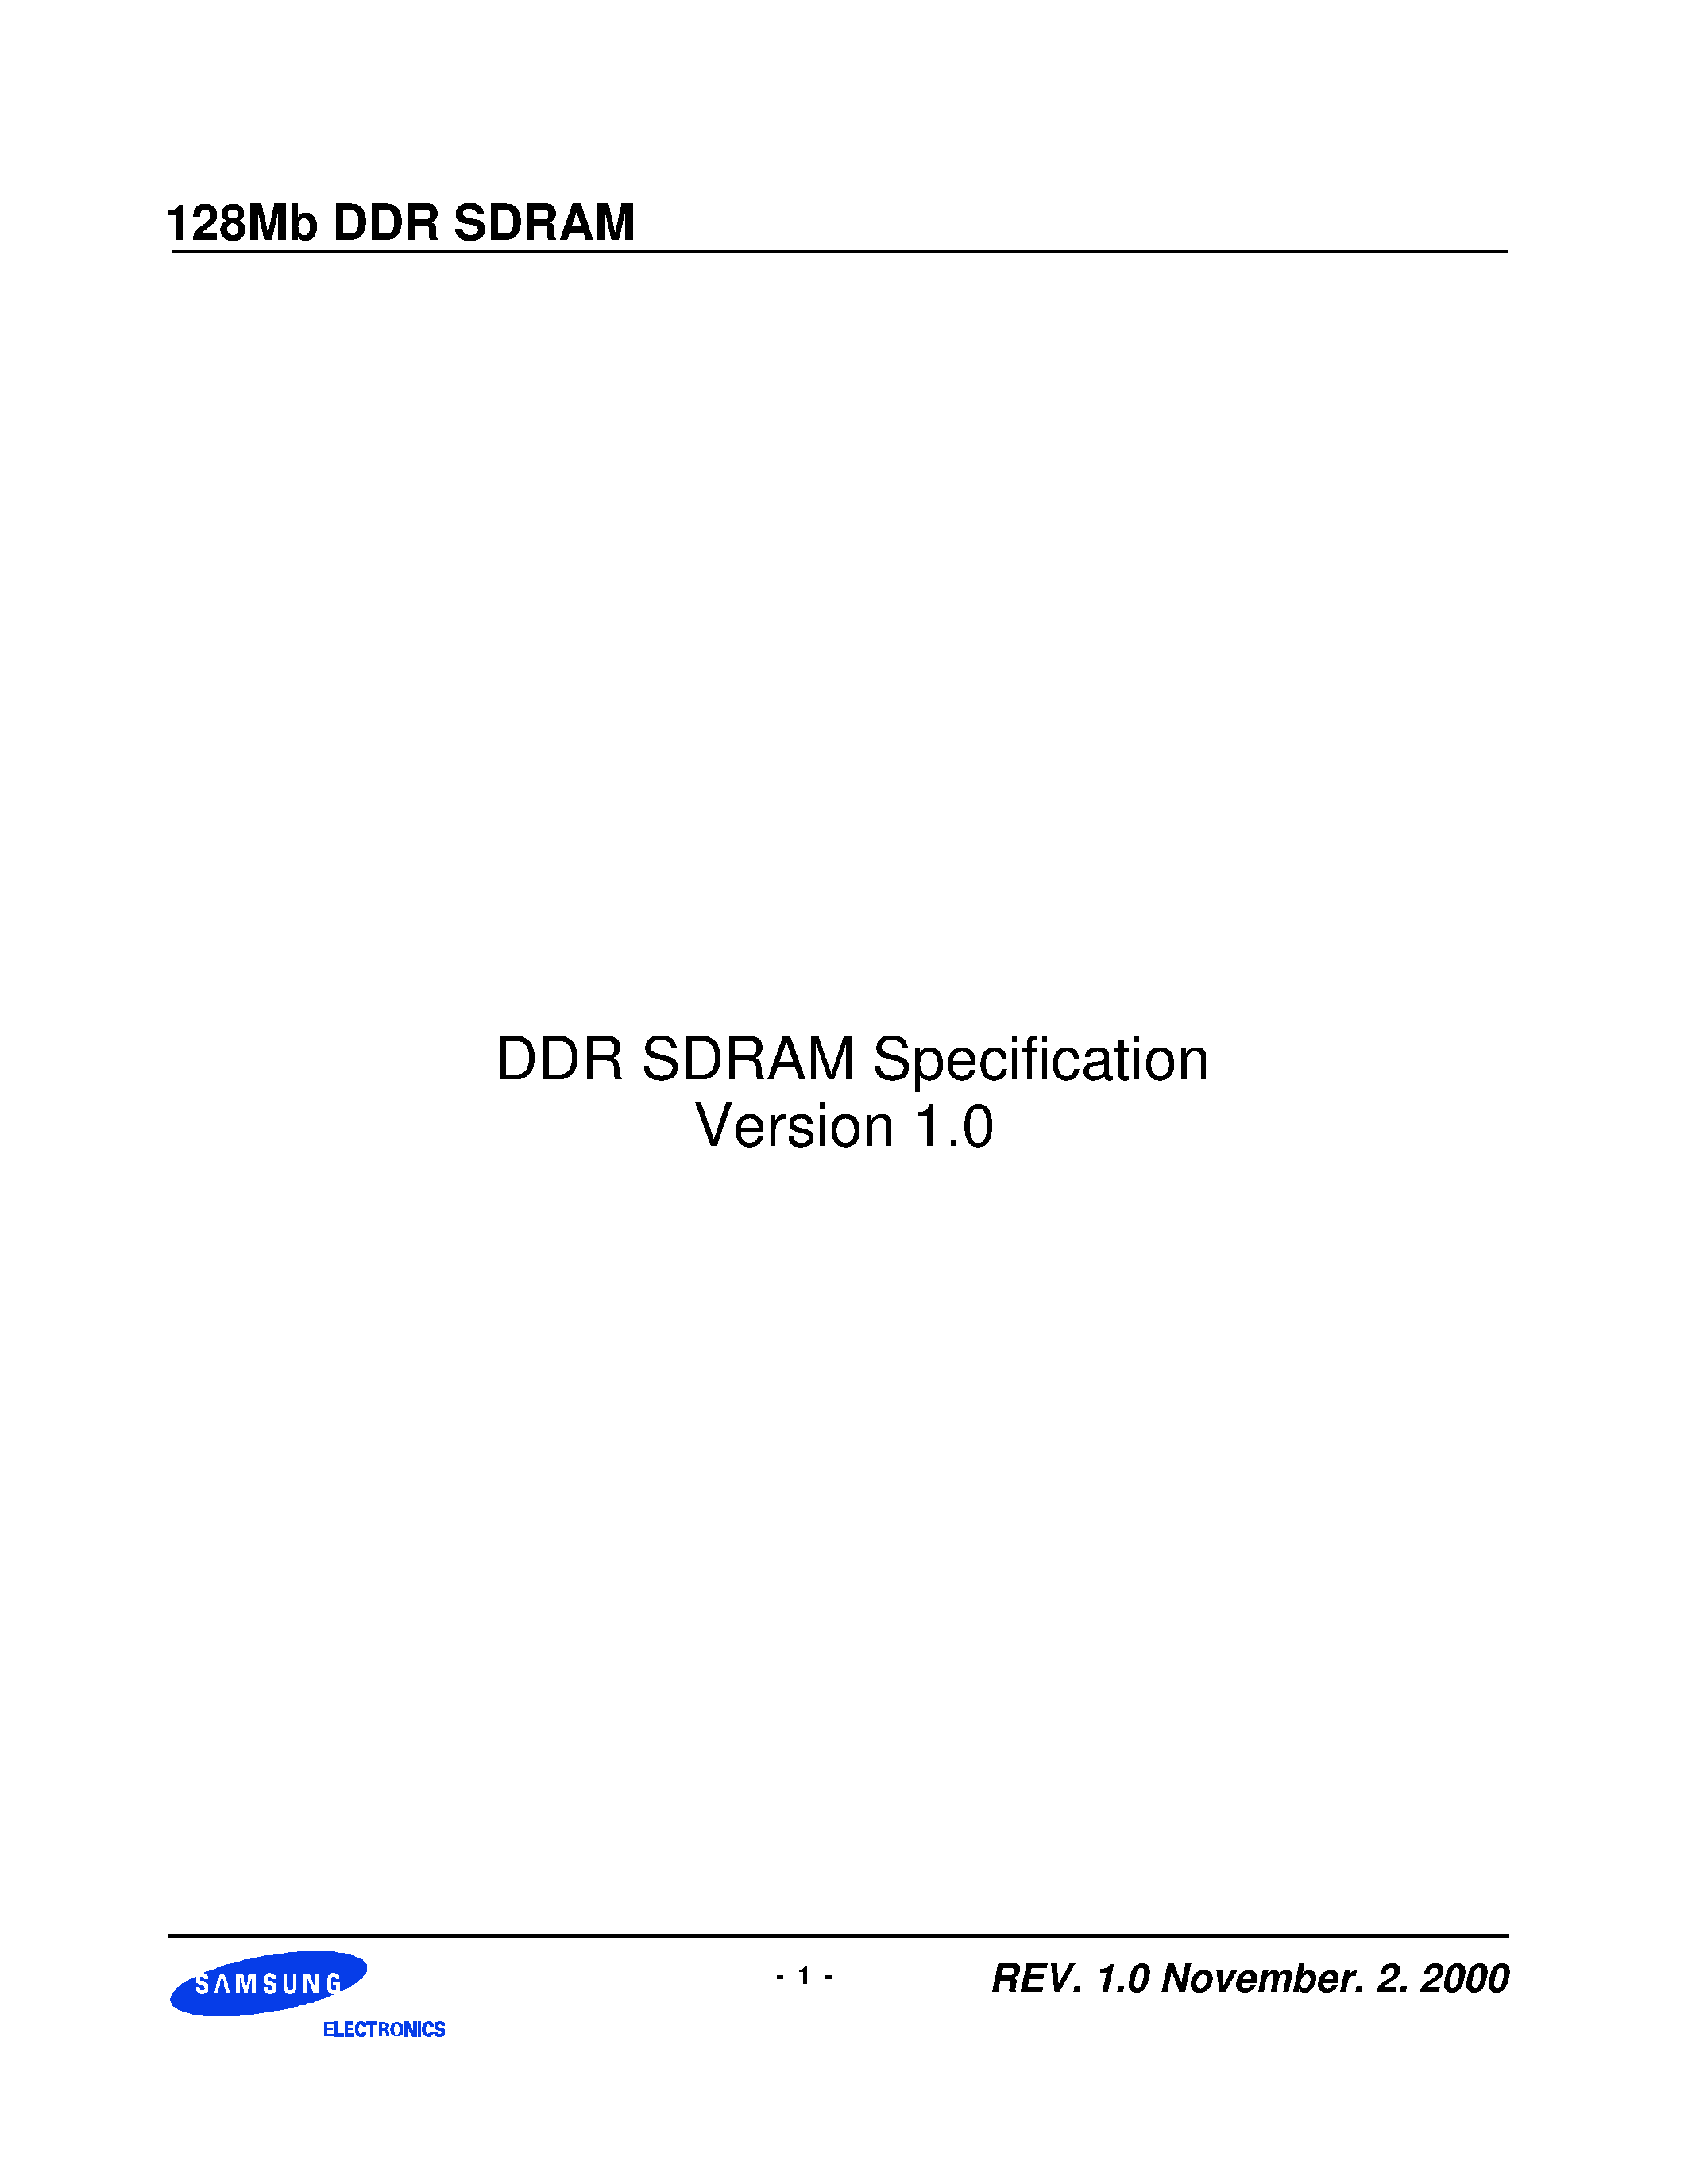 Datasheet KM44L32031BT-G(L)Y - DDR SDRAM Specification Version 1.0 page 1